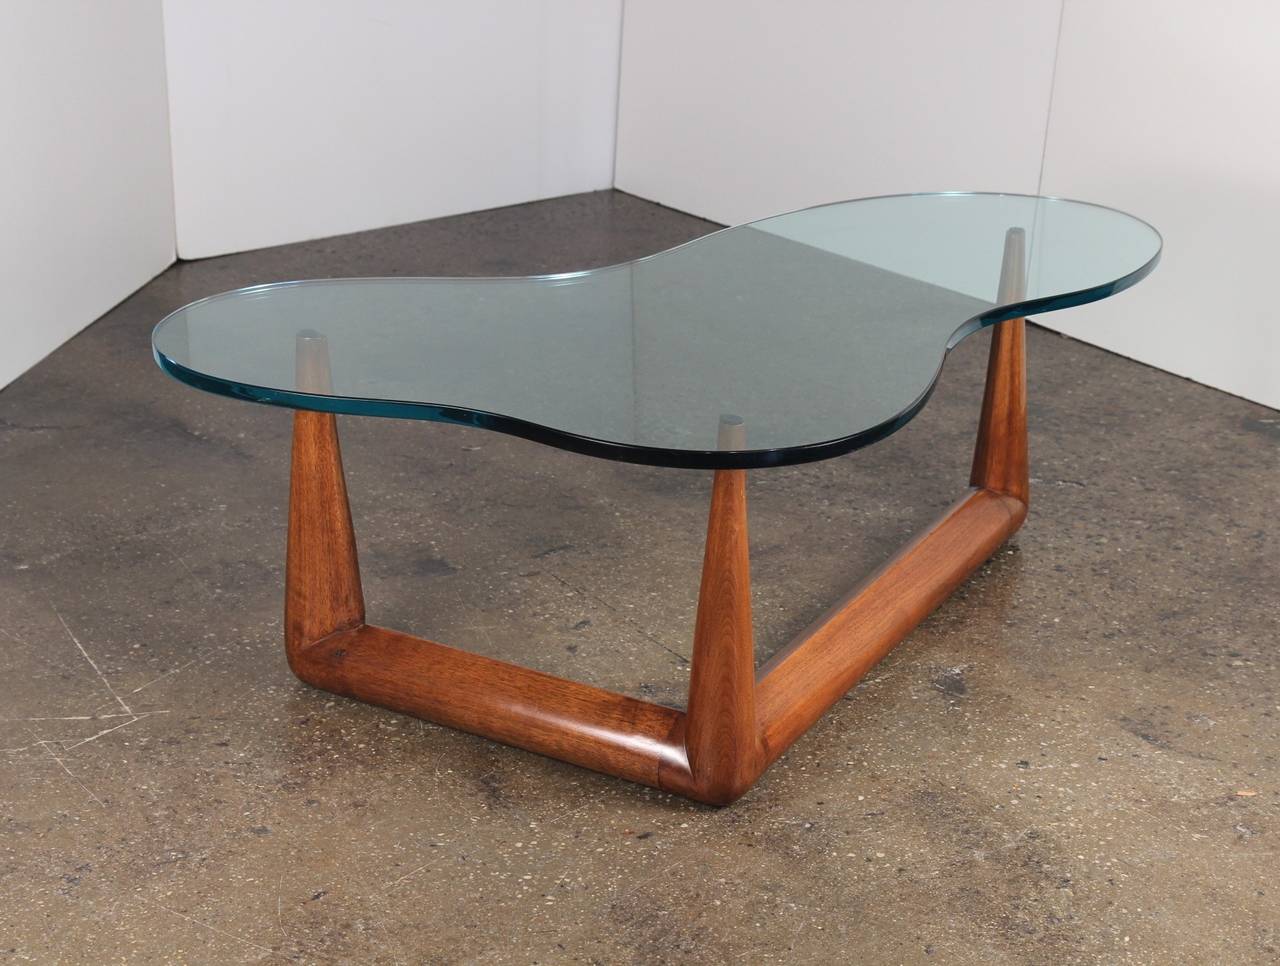 biomorphic coffee table